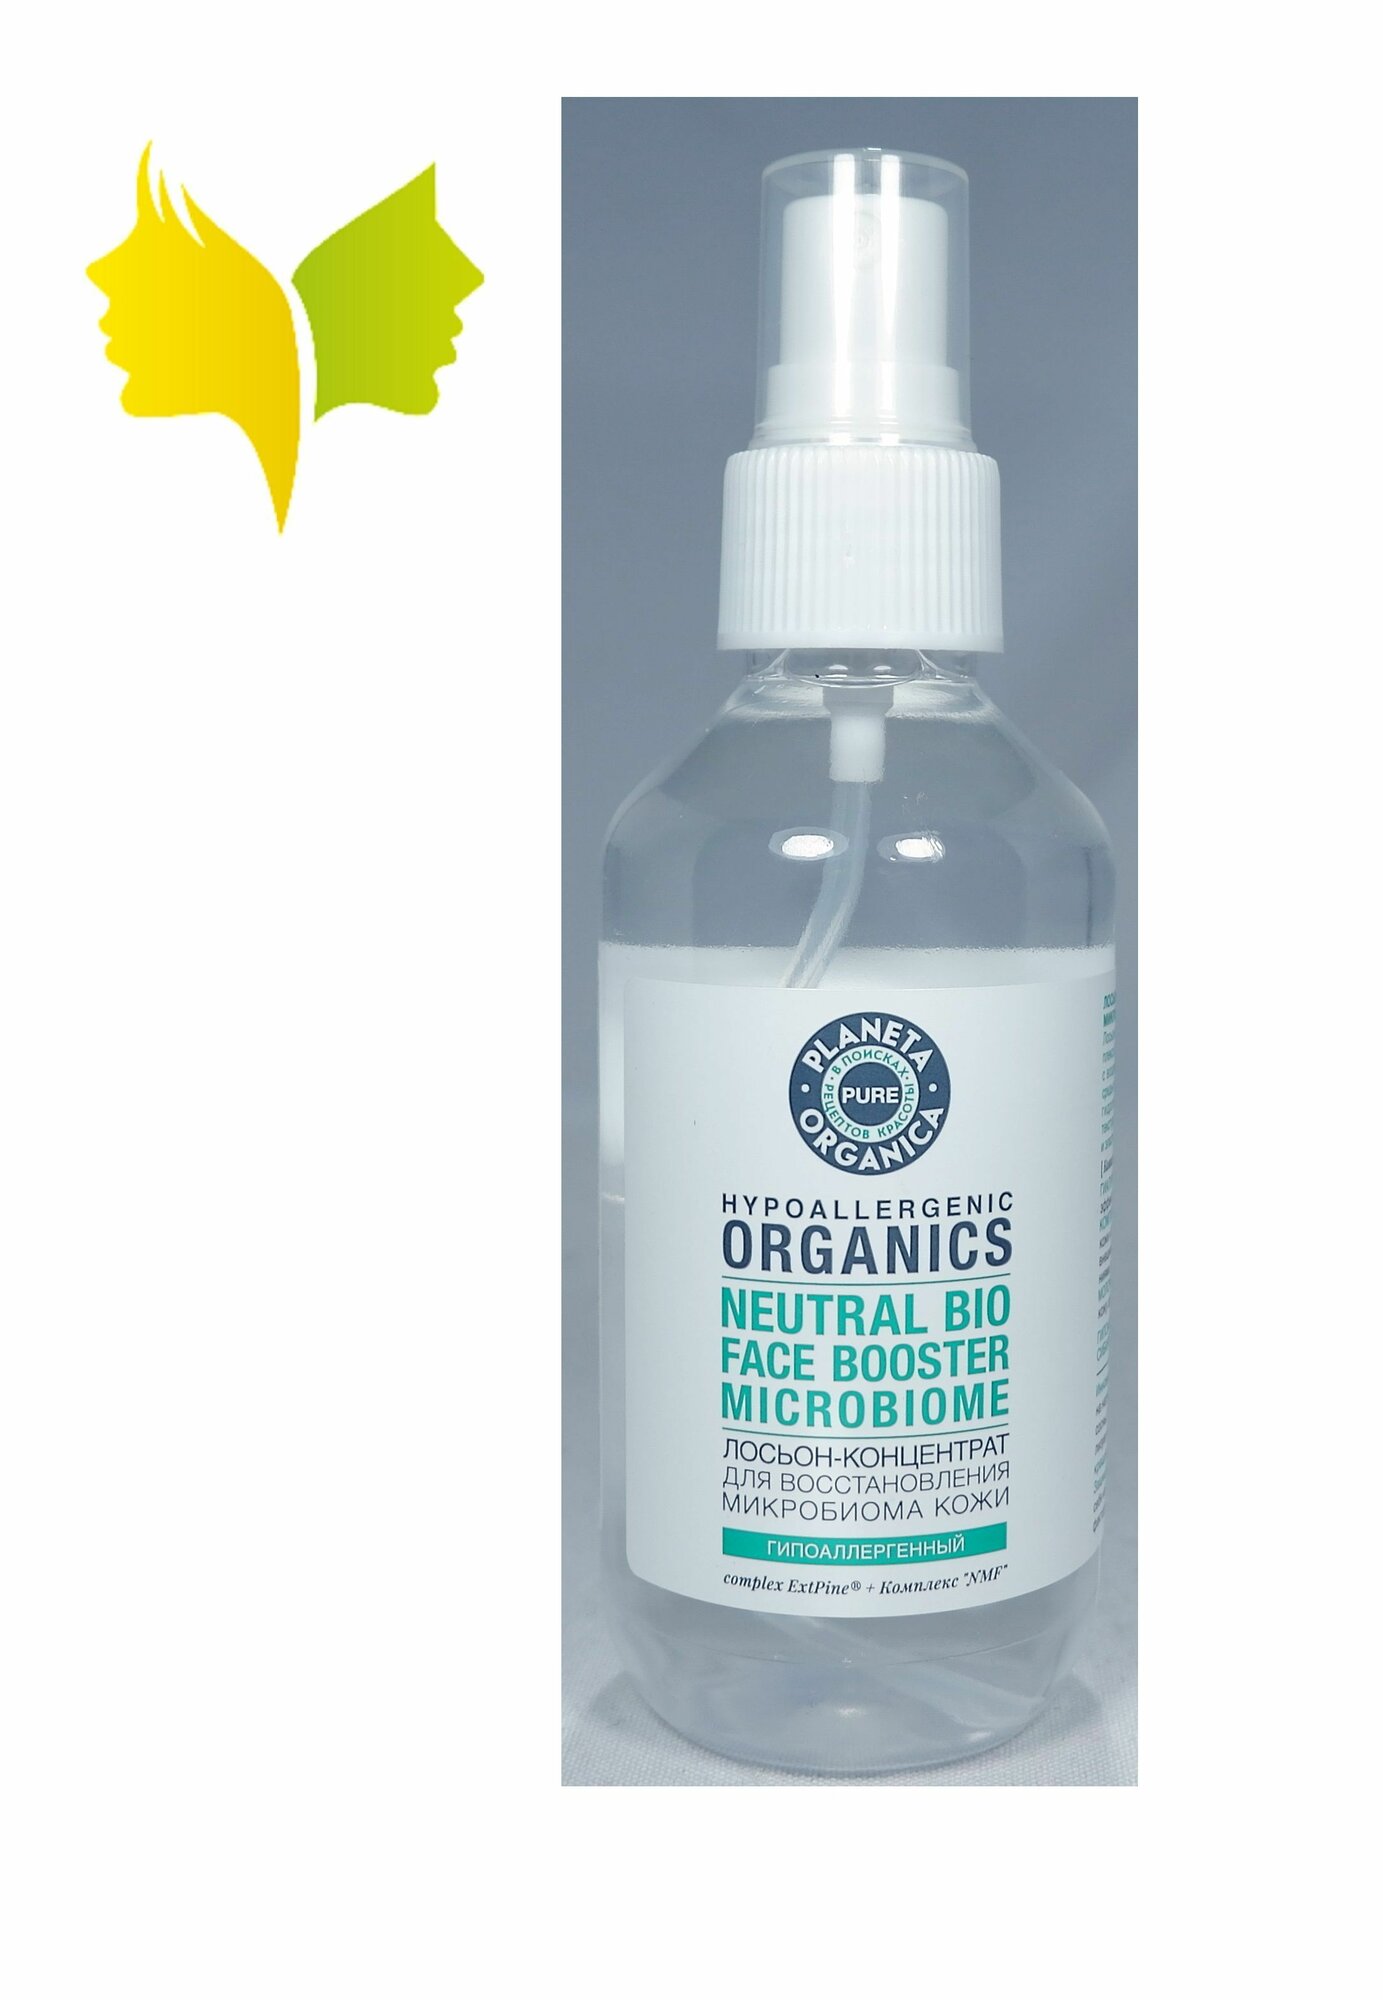 Planeta Organica Pure Лосьон-концентрат для восстановления микробиома кожи, 150 мл.